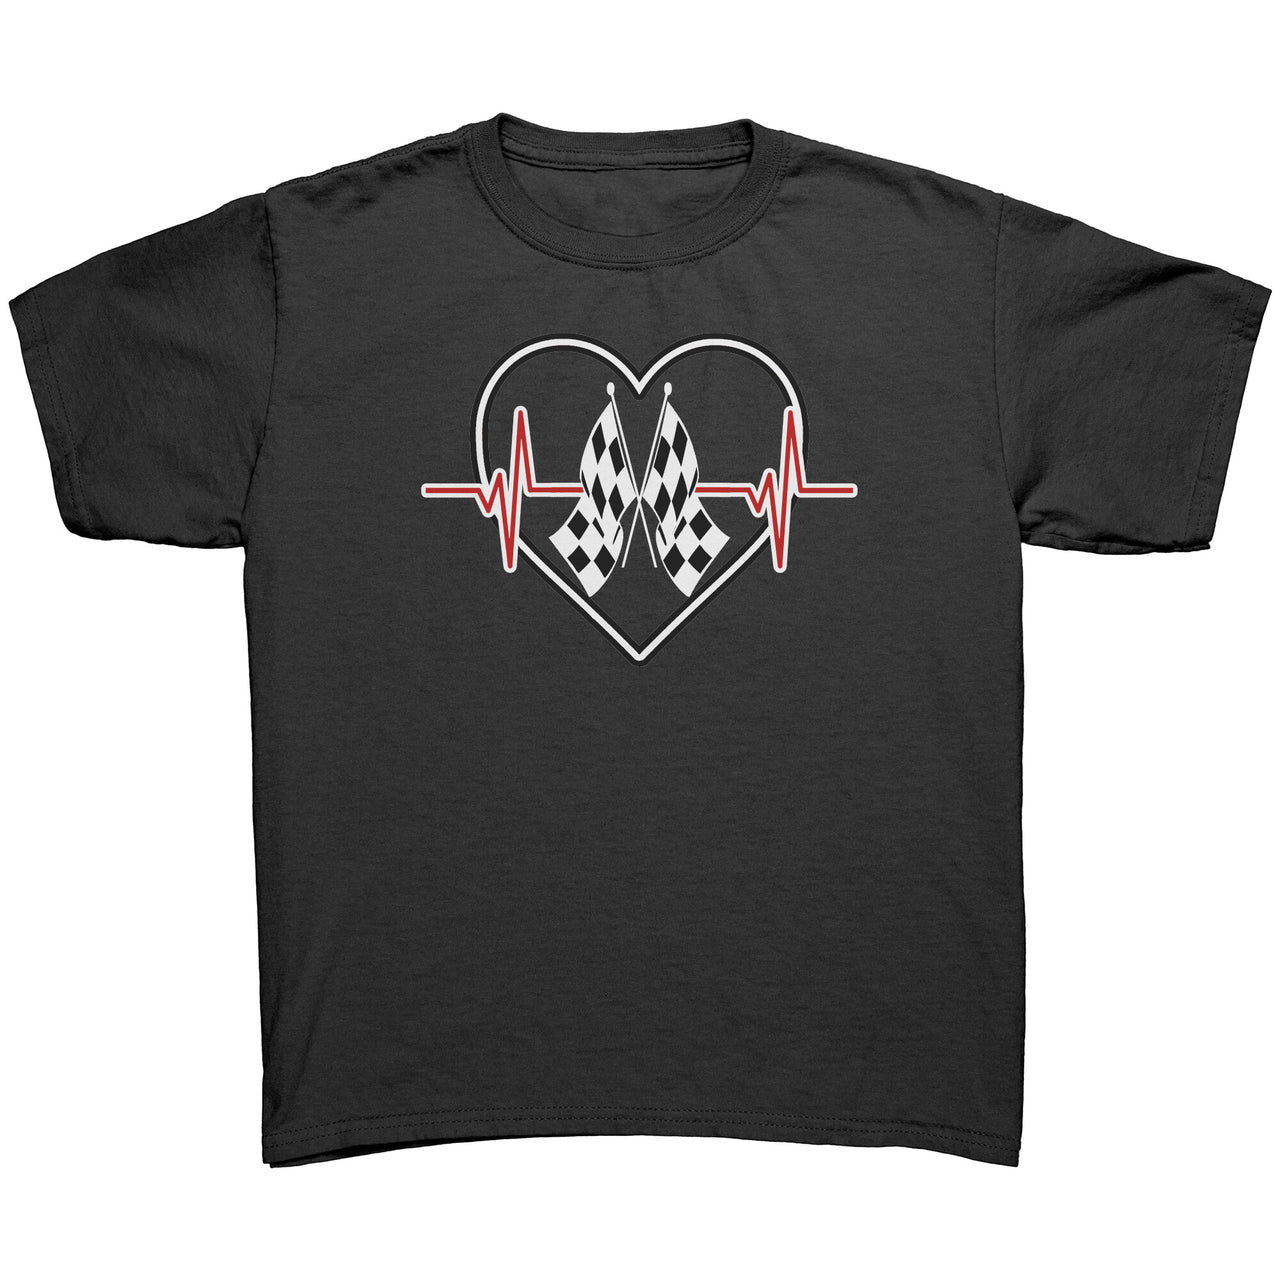 Racing Heartbeat Youth T-shirts/Hoodies